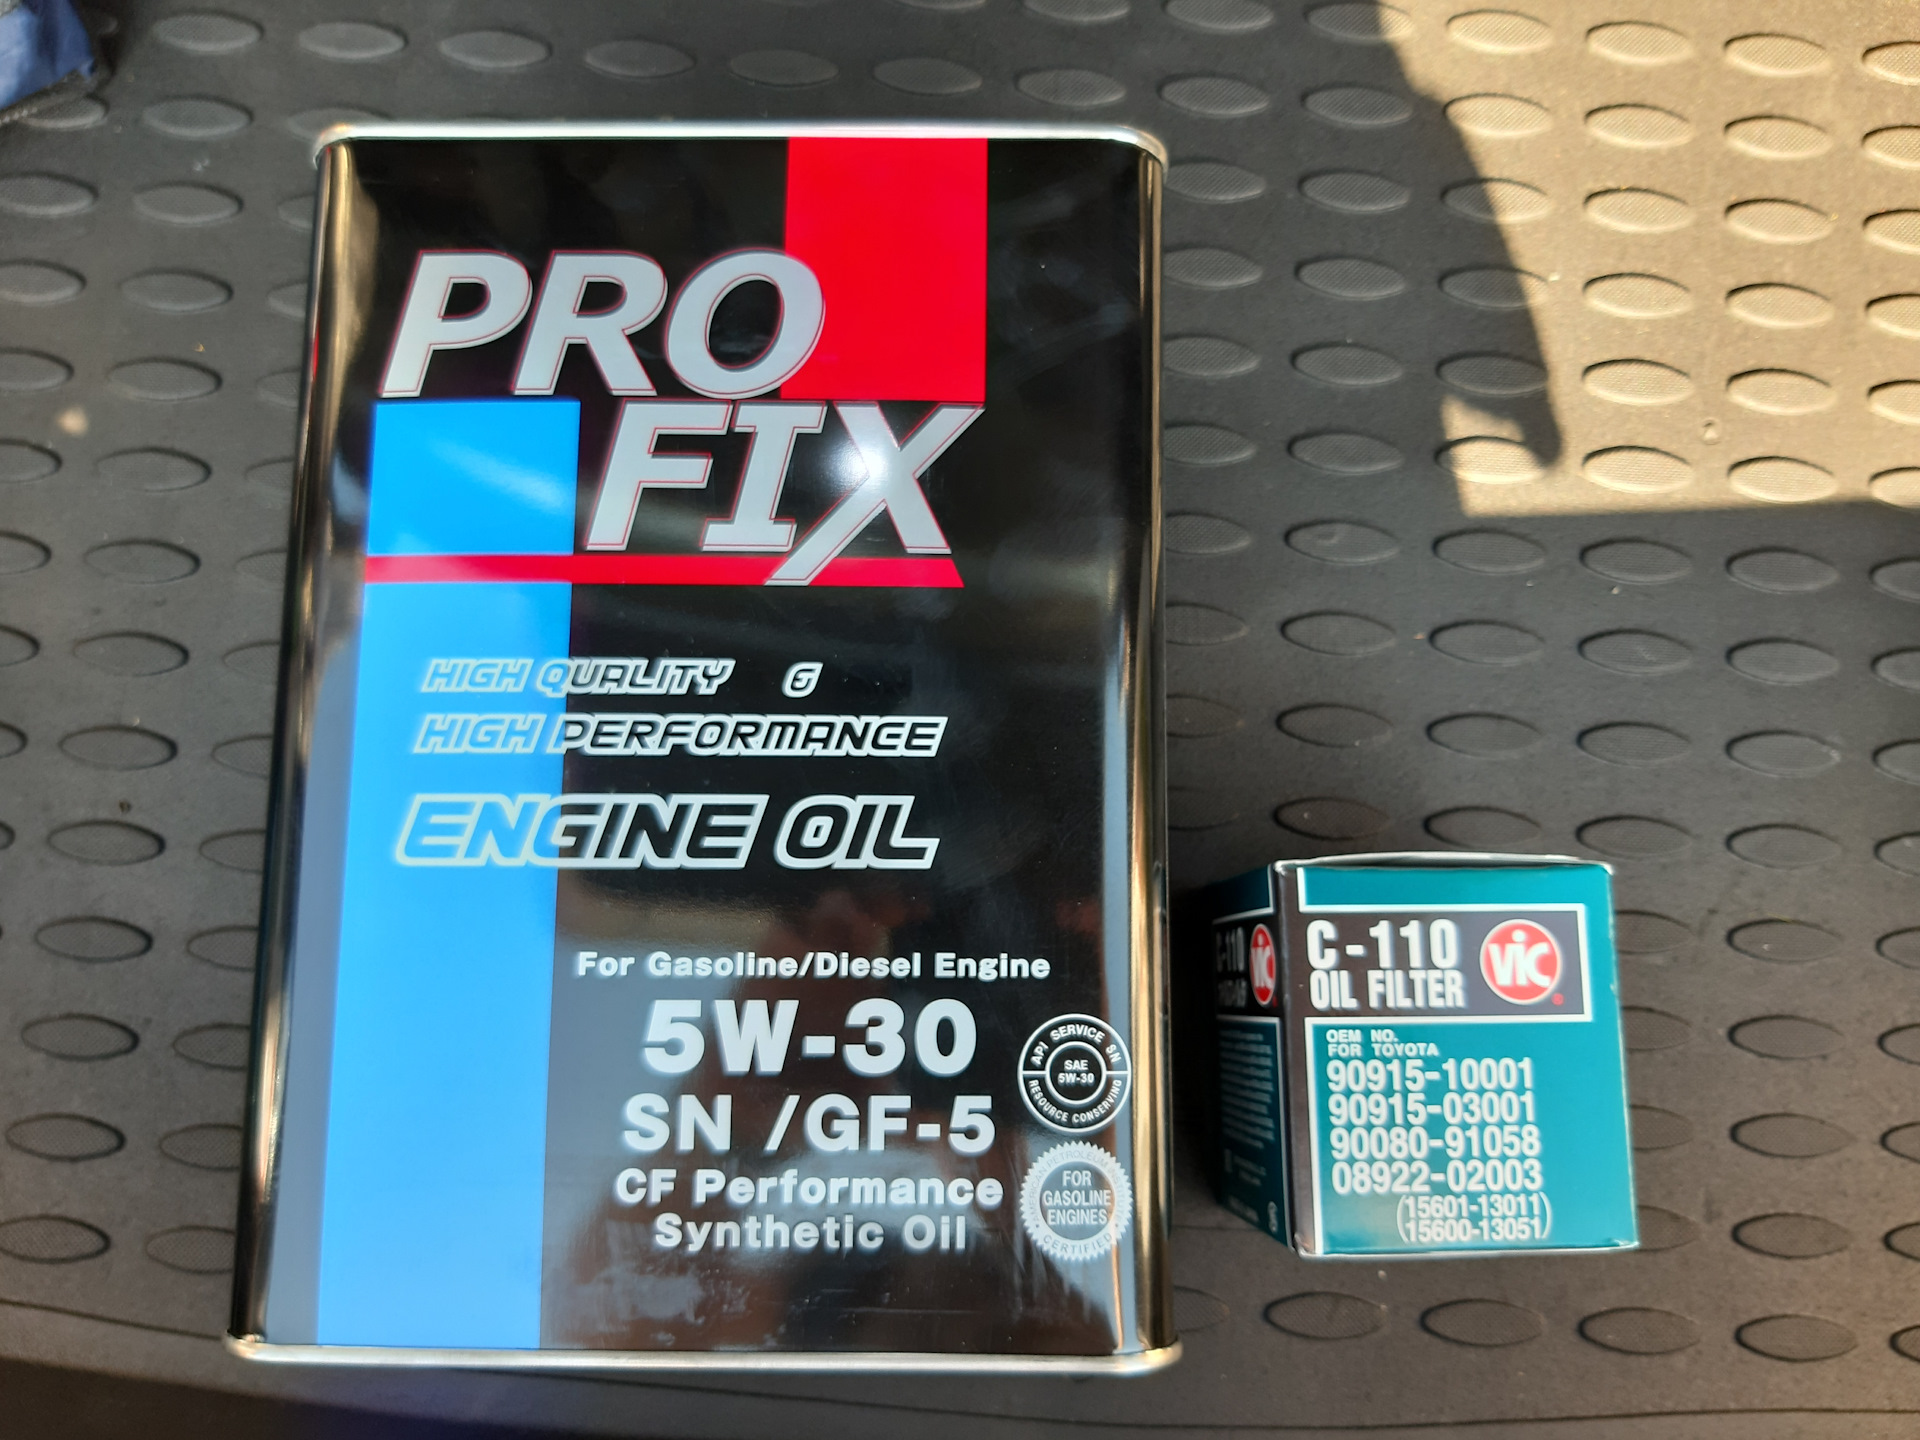 PROFIX 5w30. Sn5w30c PROFIX. Pro116 PROFIX. PROFIX упаковка фильтров. Масло 5w30 выбрать